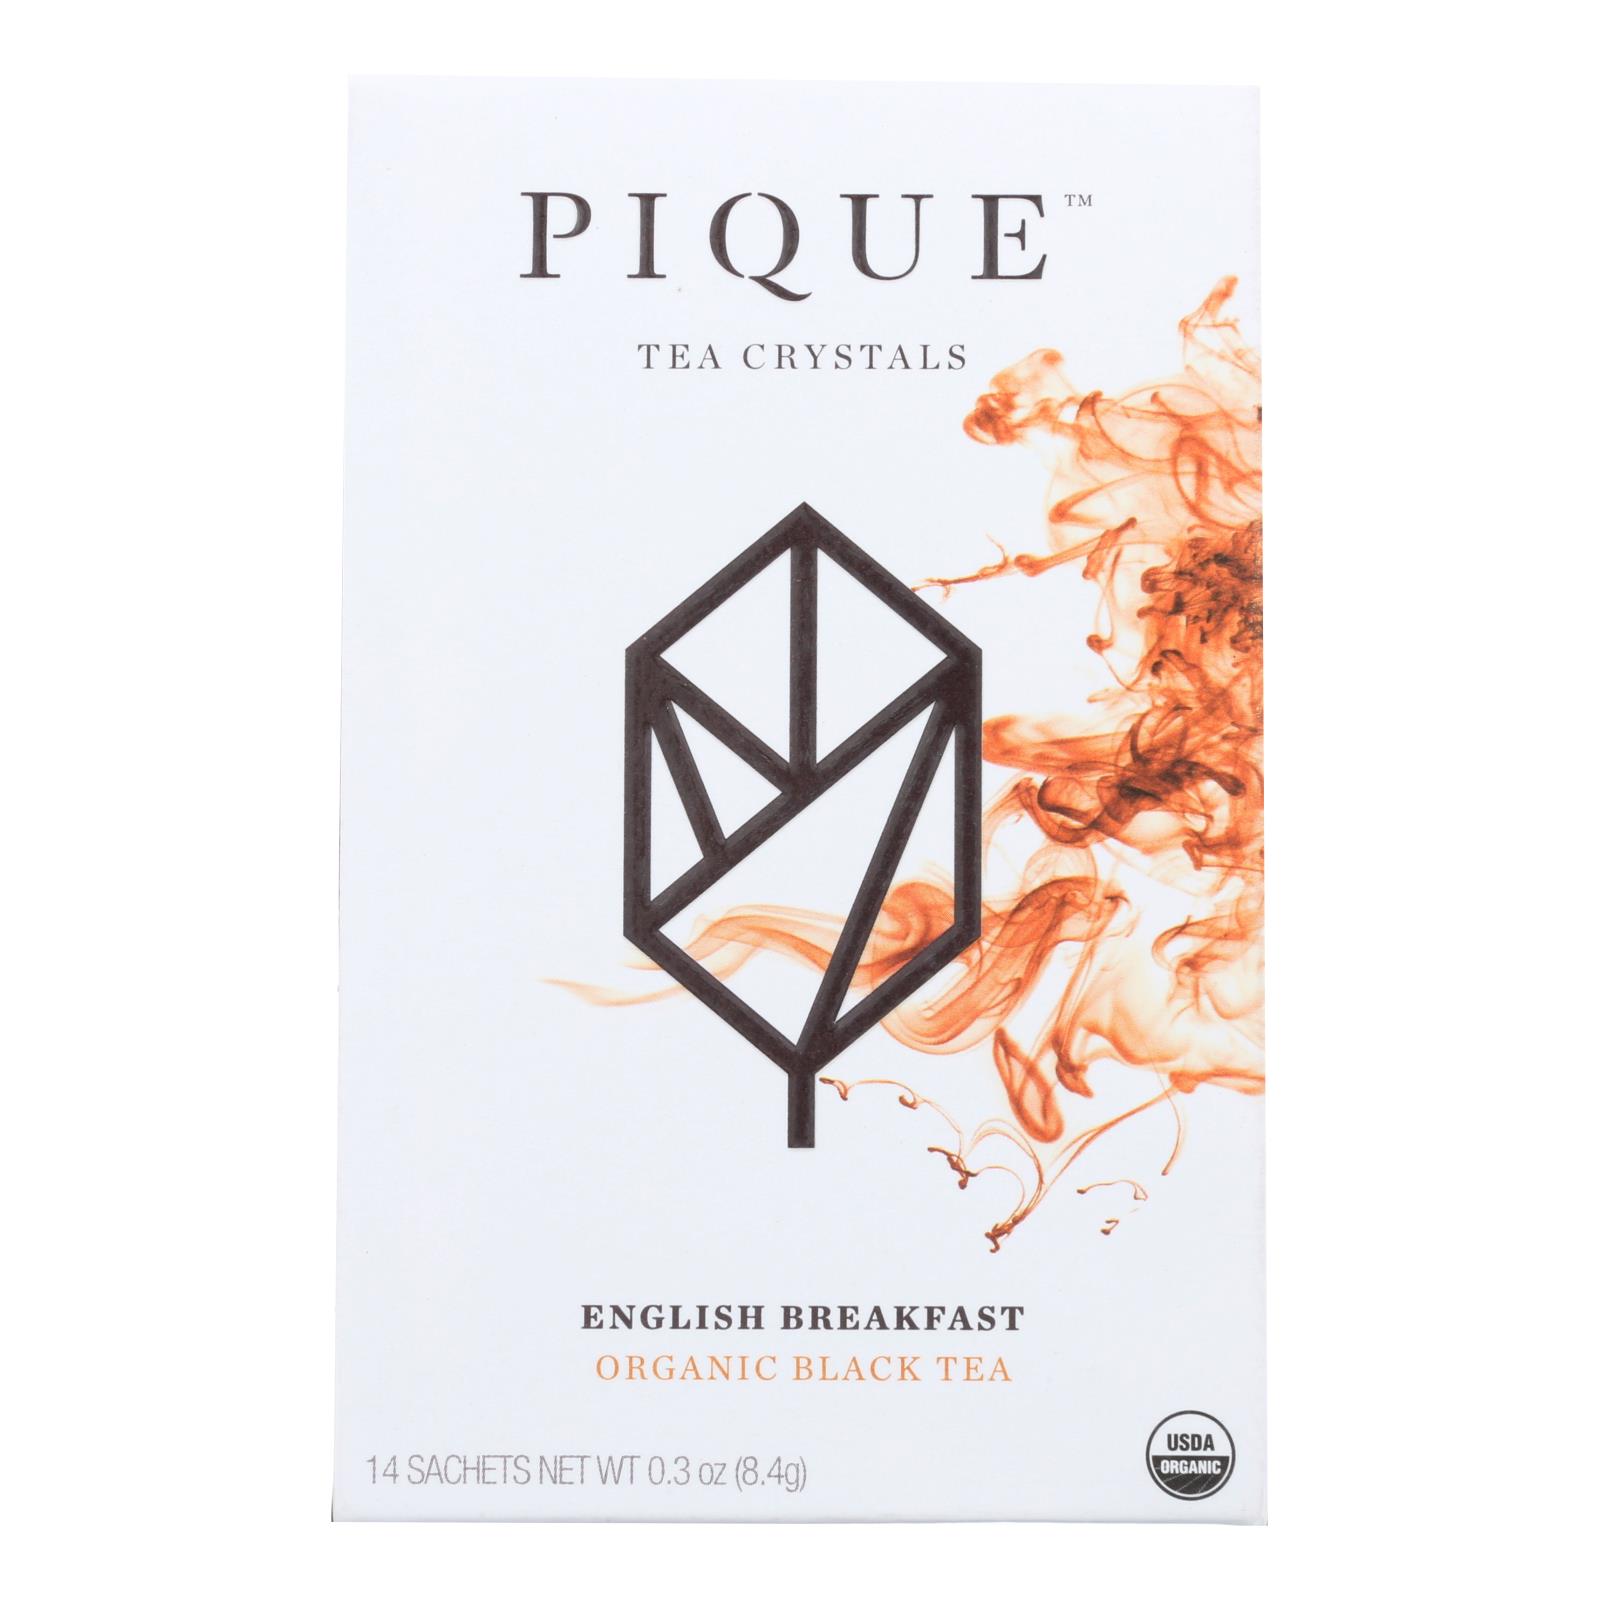 Pique Tea Crystals Organic Black Tea, English Breakfast - Case of 6 - 14 CT